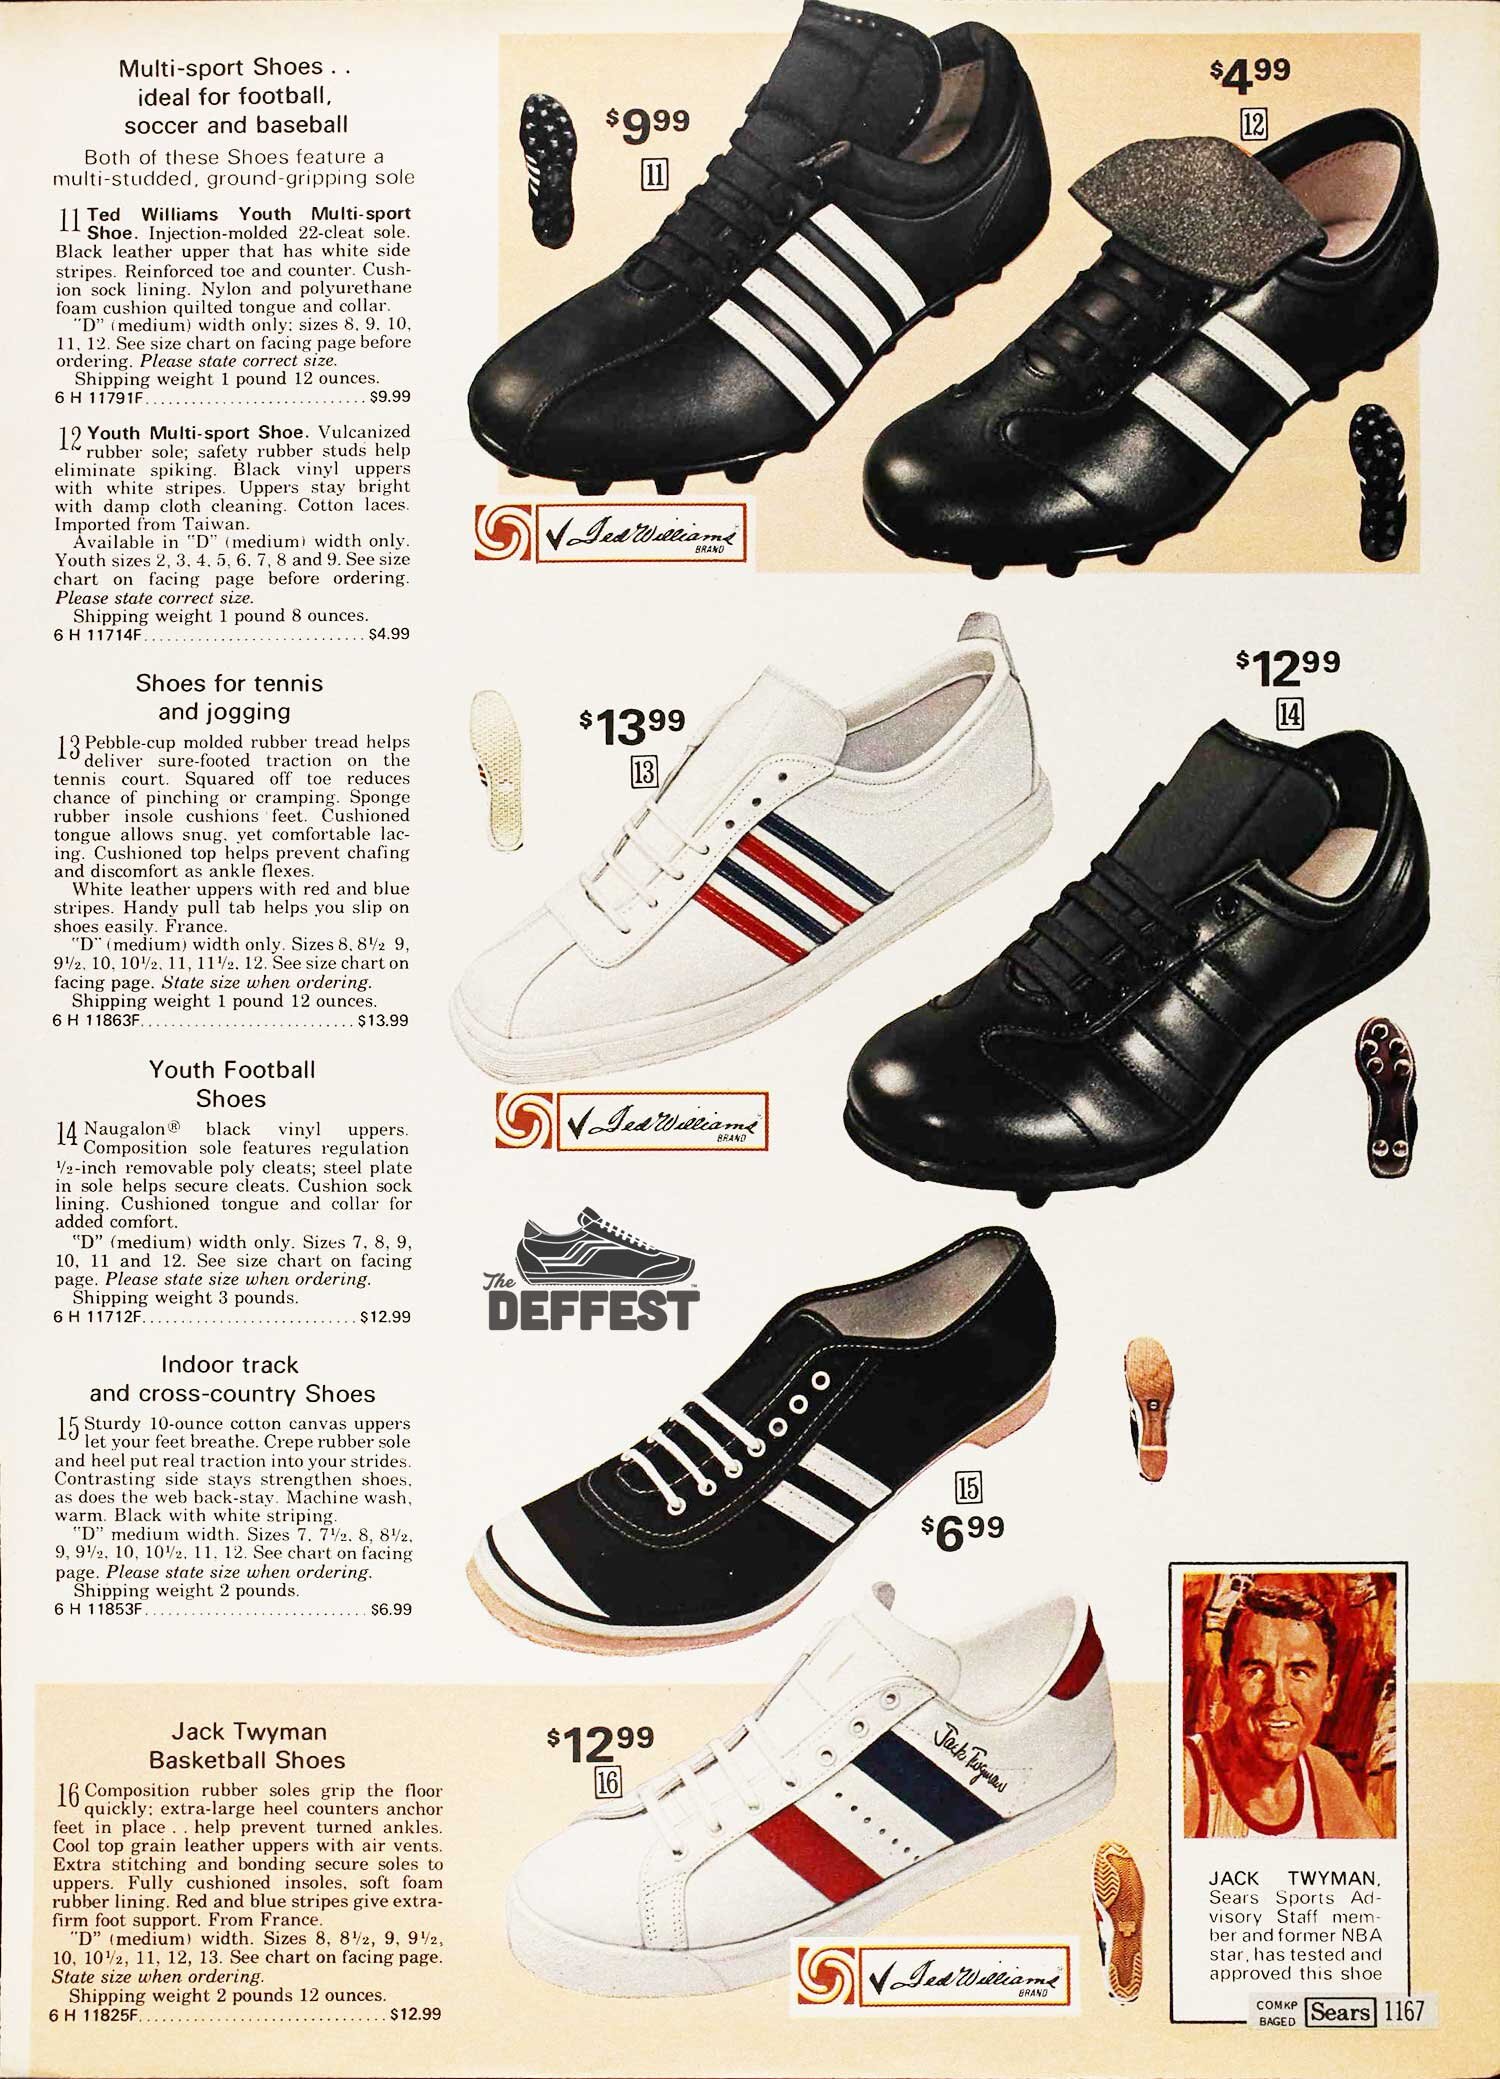 sears shoes — The Deffest®. A vintage 